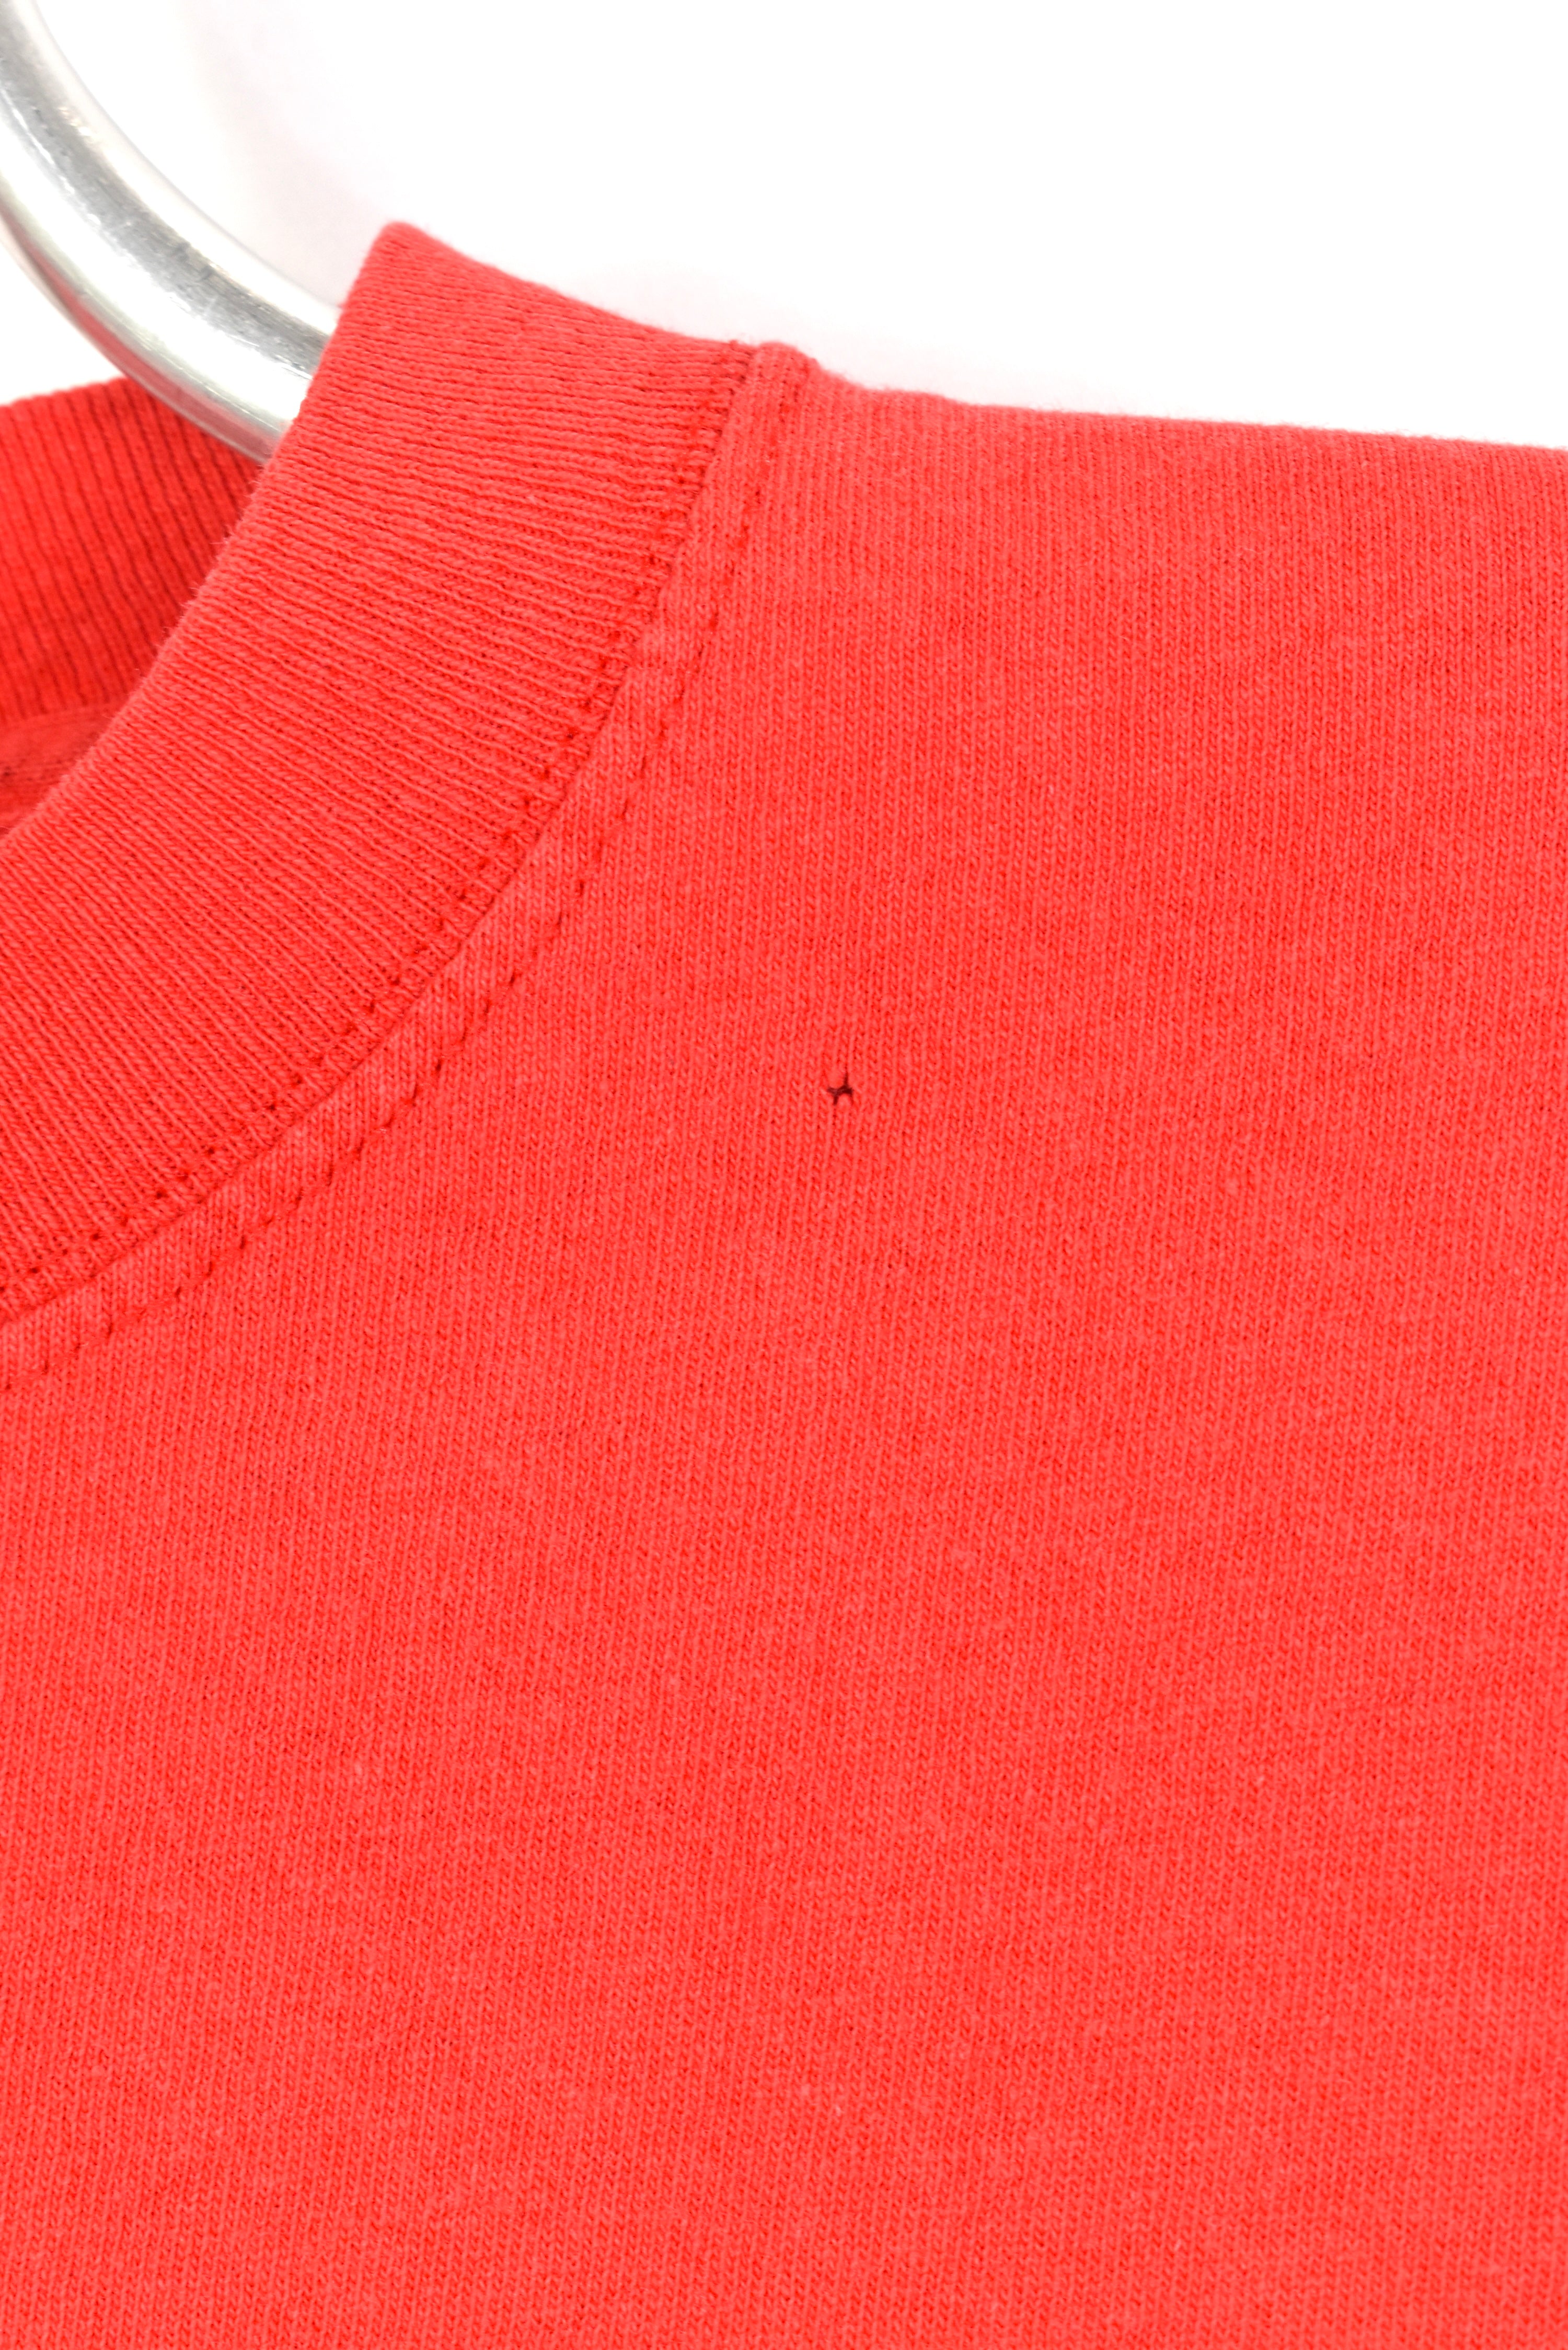 Vintage Minnesota twins shirt, MLB American baseball graphic tee - large, red PRO SPORT